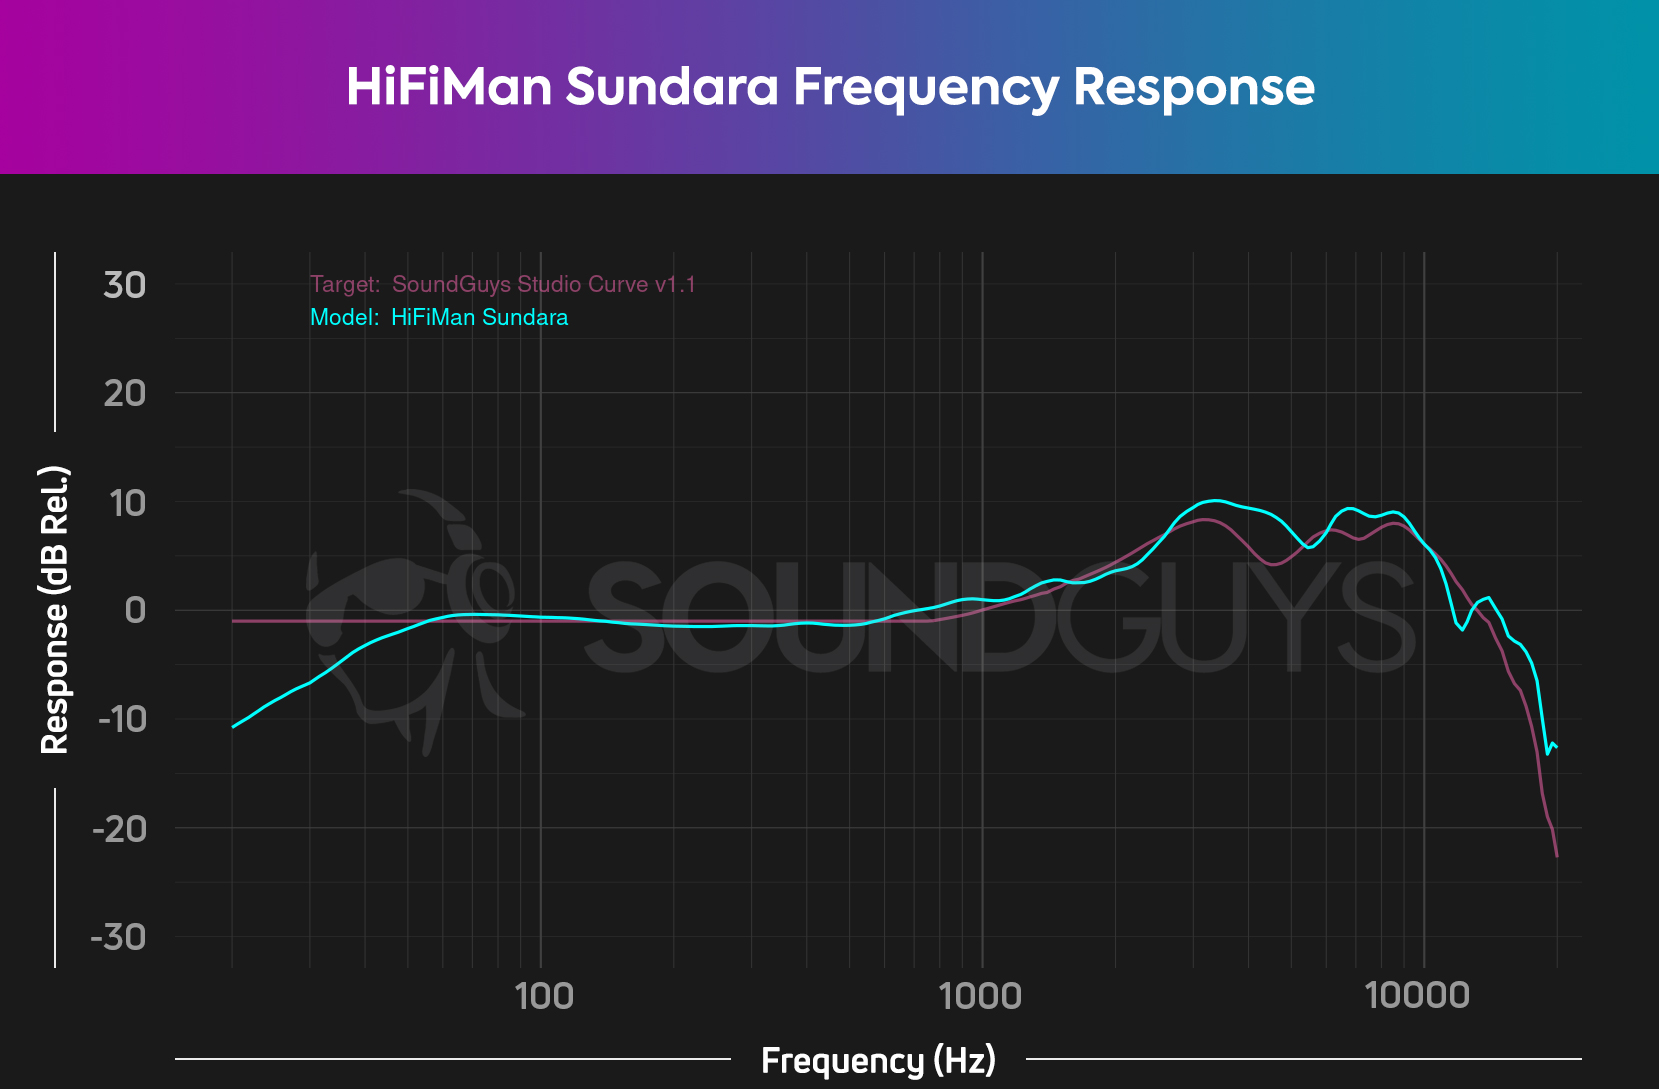 The HiFiMan Sundara follows the SoundGuys Studio curve very well, though has a bit of high-end emphasis.